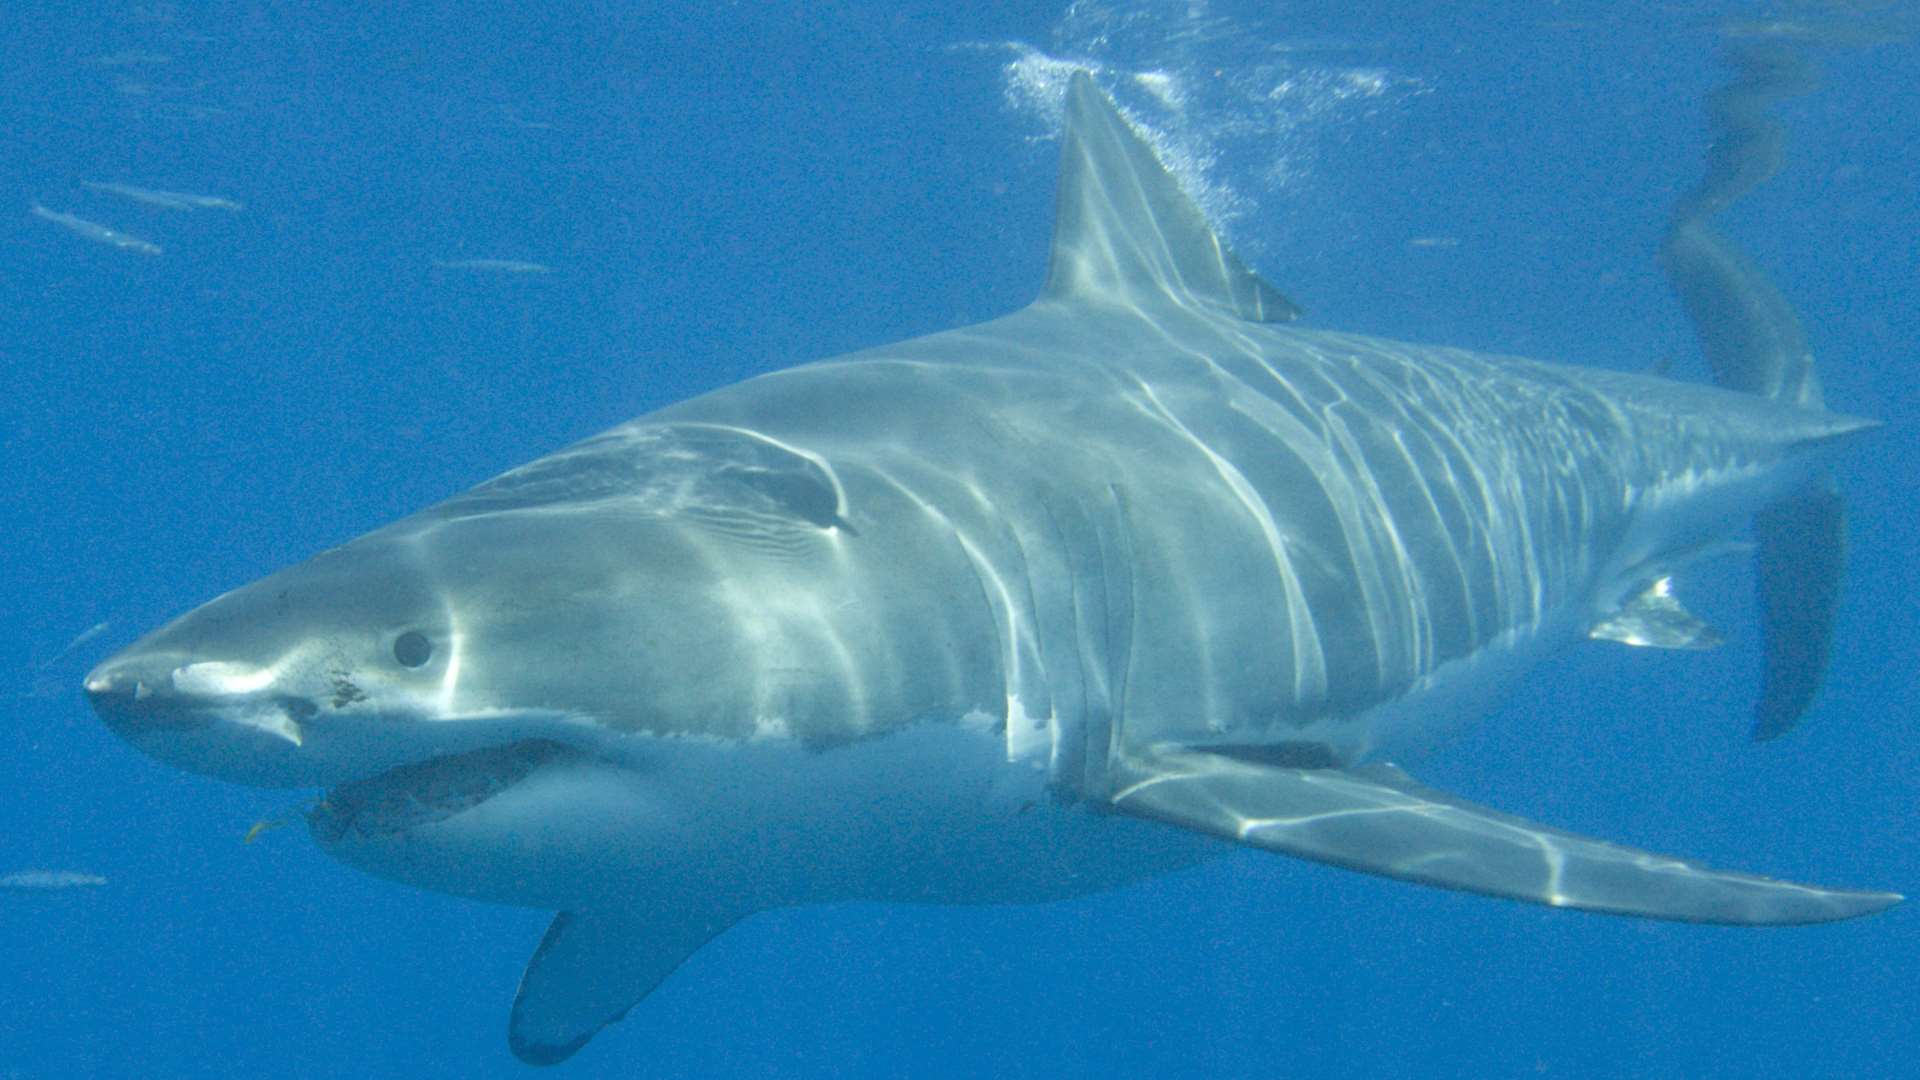 The shark bit Frankie Gonsalves' foot and calf. Chuck Babbitt/Getty Images/iStockphoto.